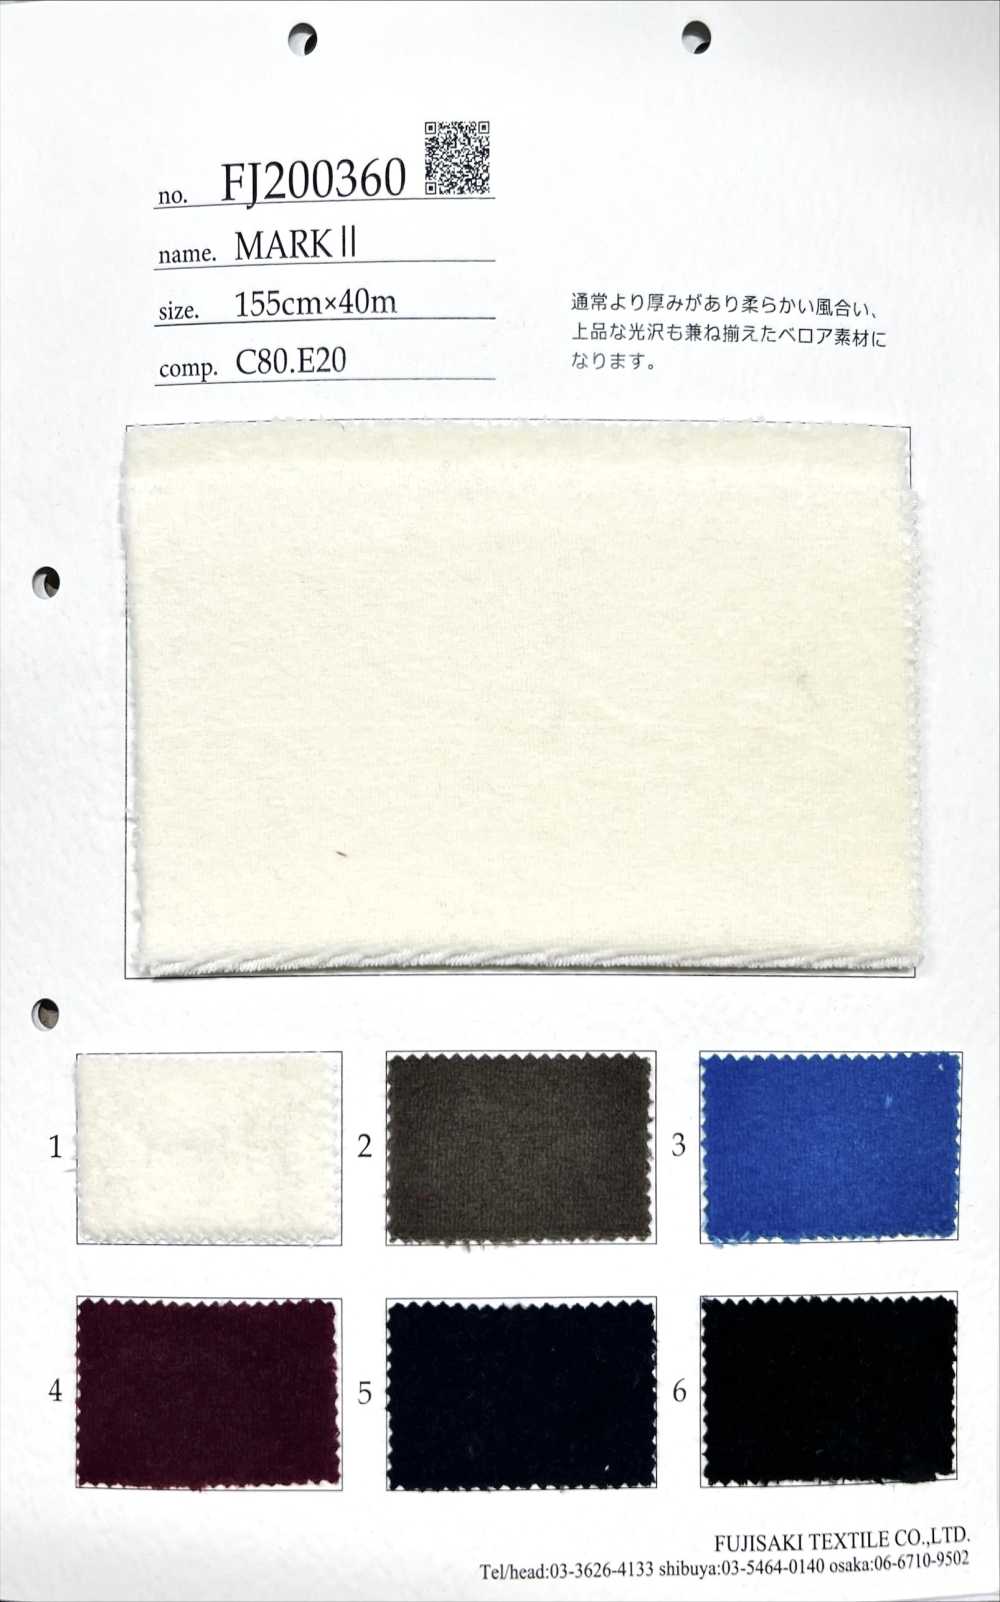 FJ200360 ĐÁNH DẤUⅡ[Vải] Fujisaki Textile